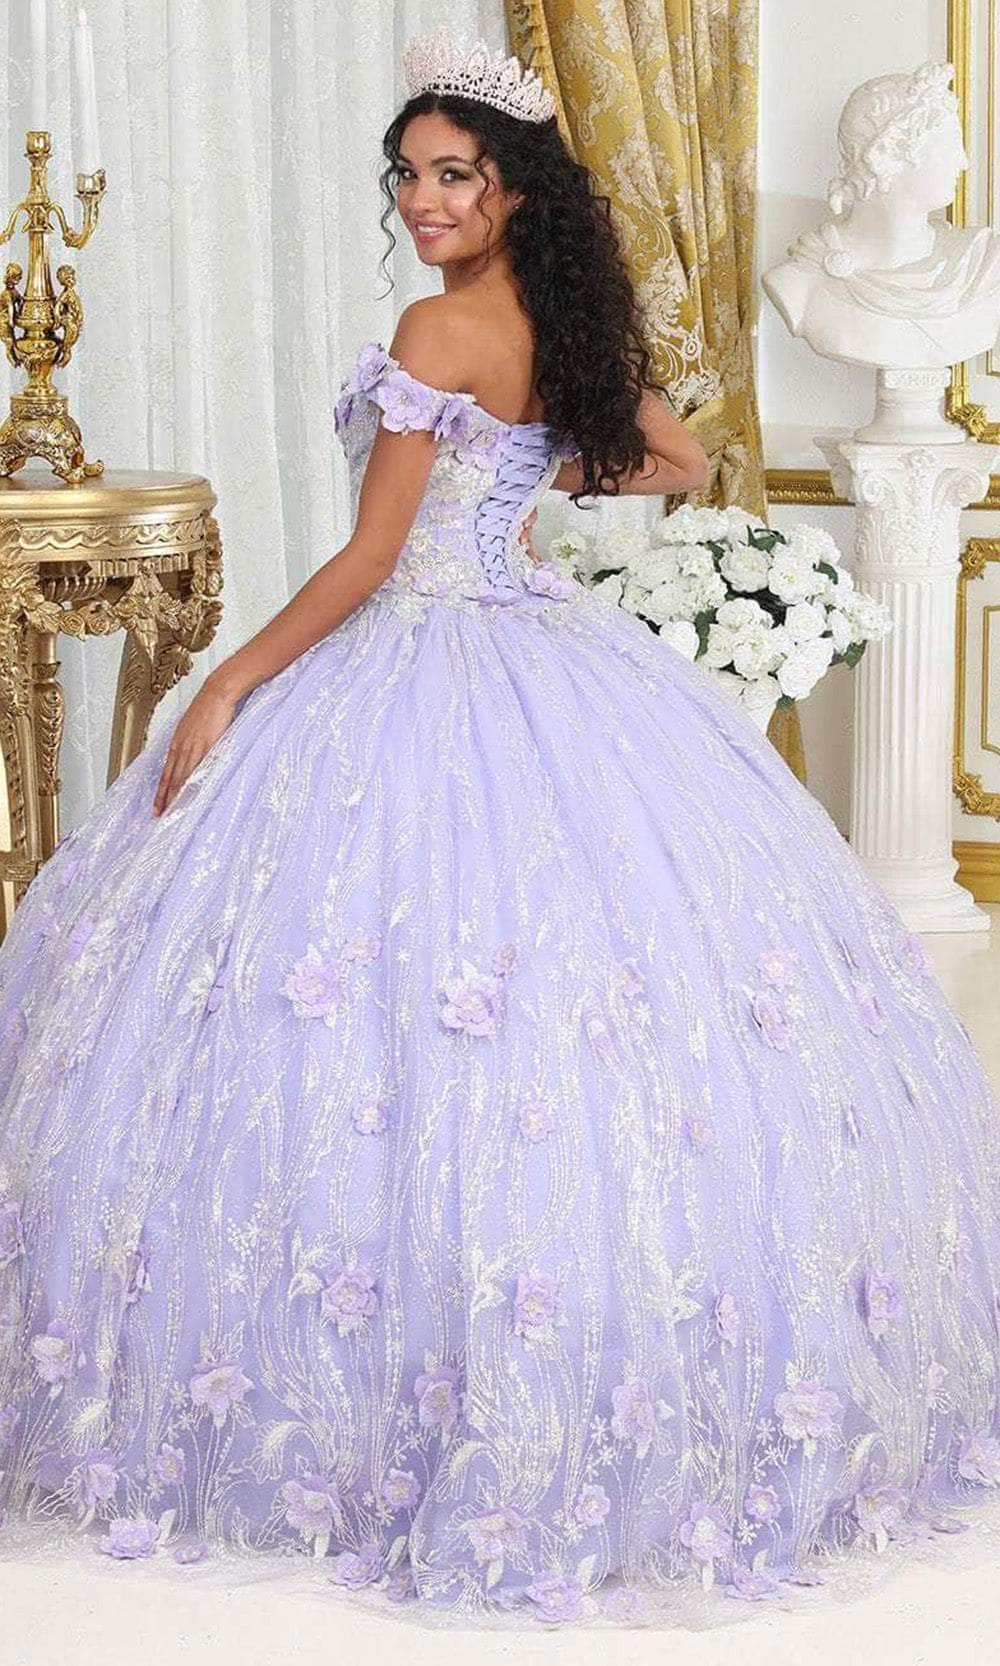 May Queen LK225 - Off Shoulder Floral Ballgown Quinceanera Dresses 